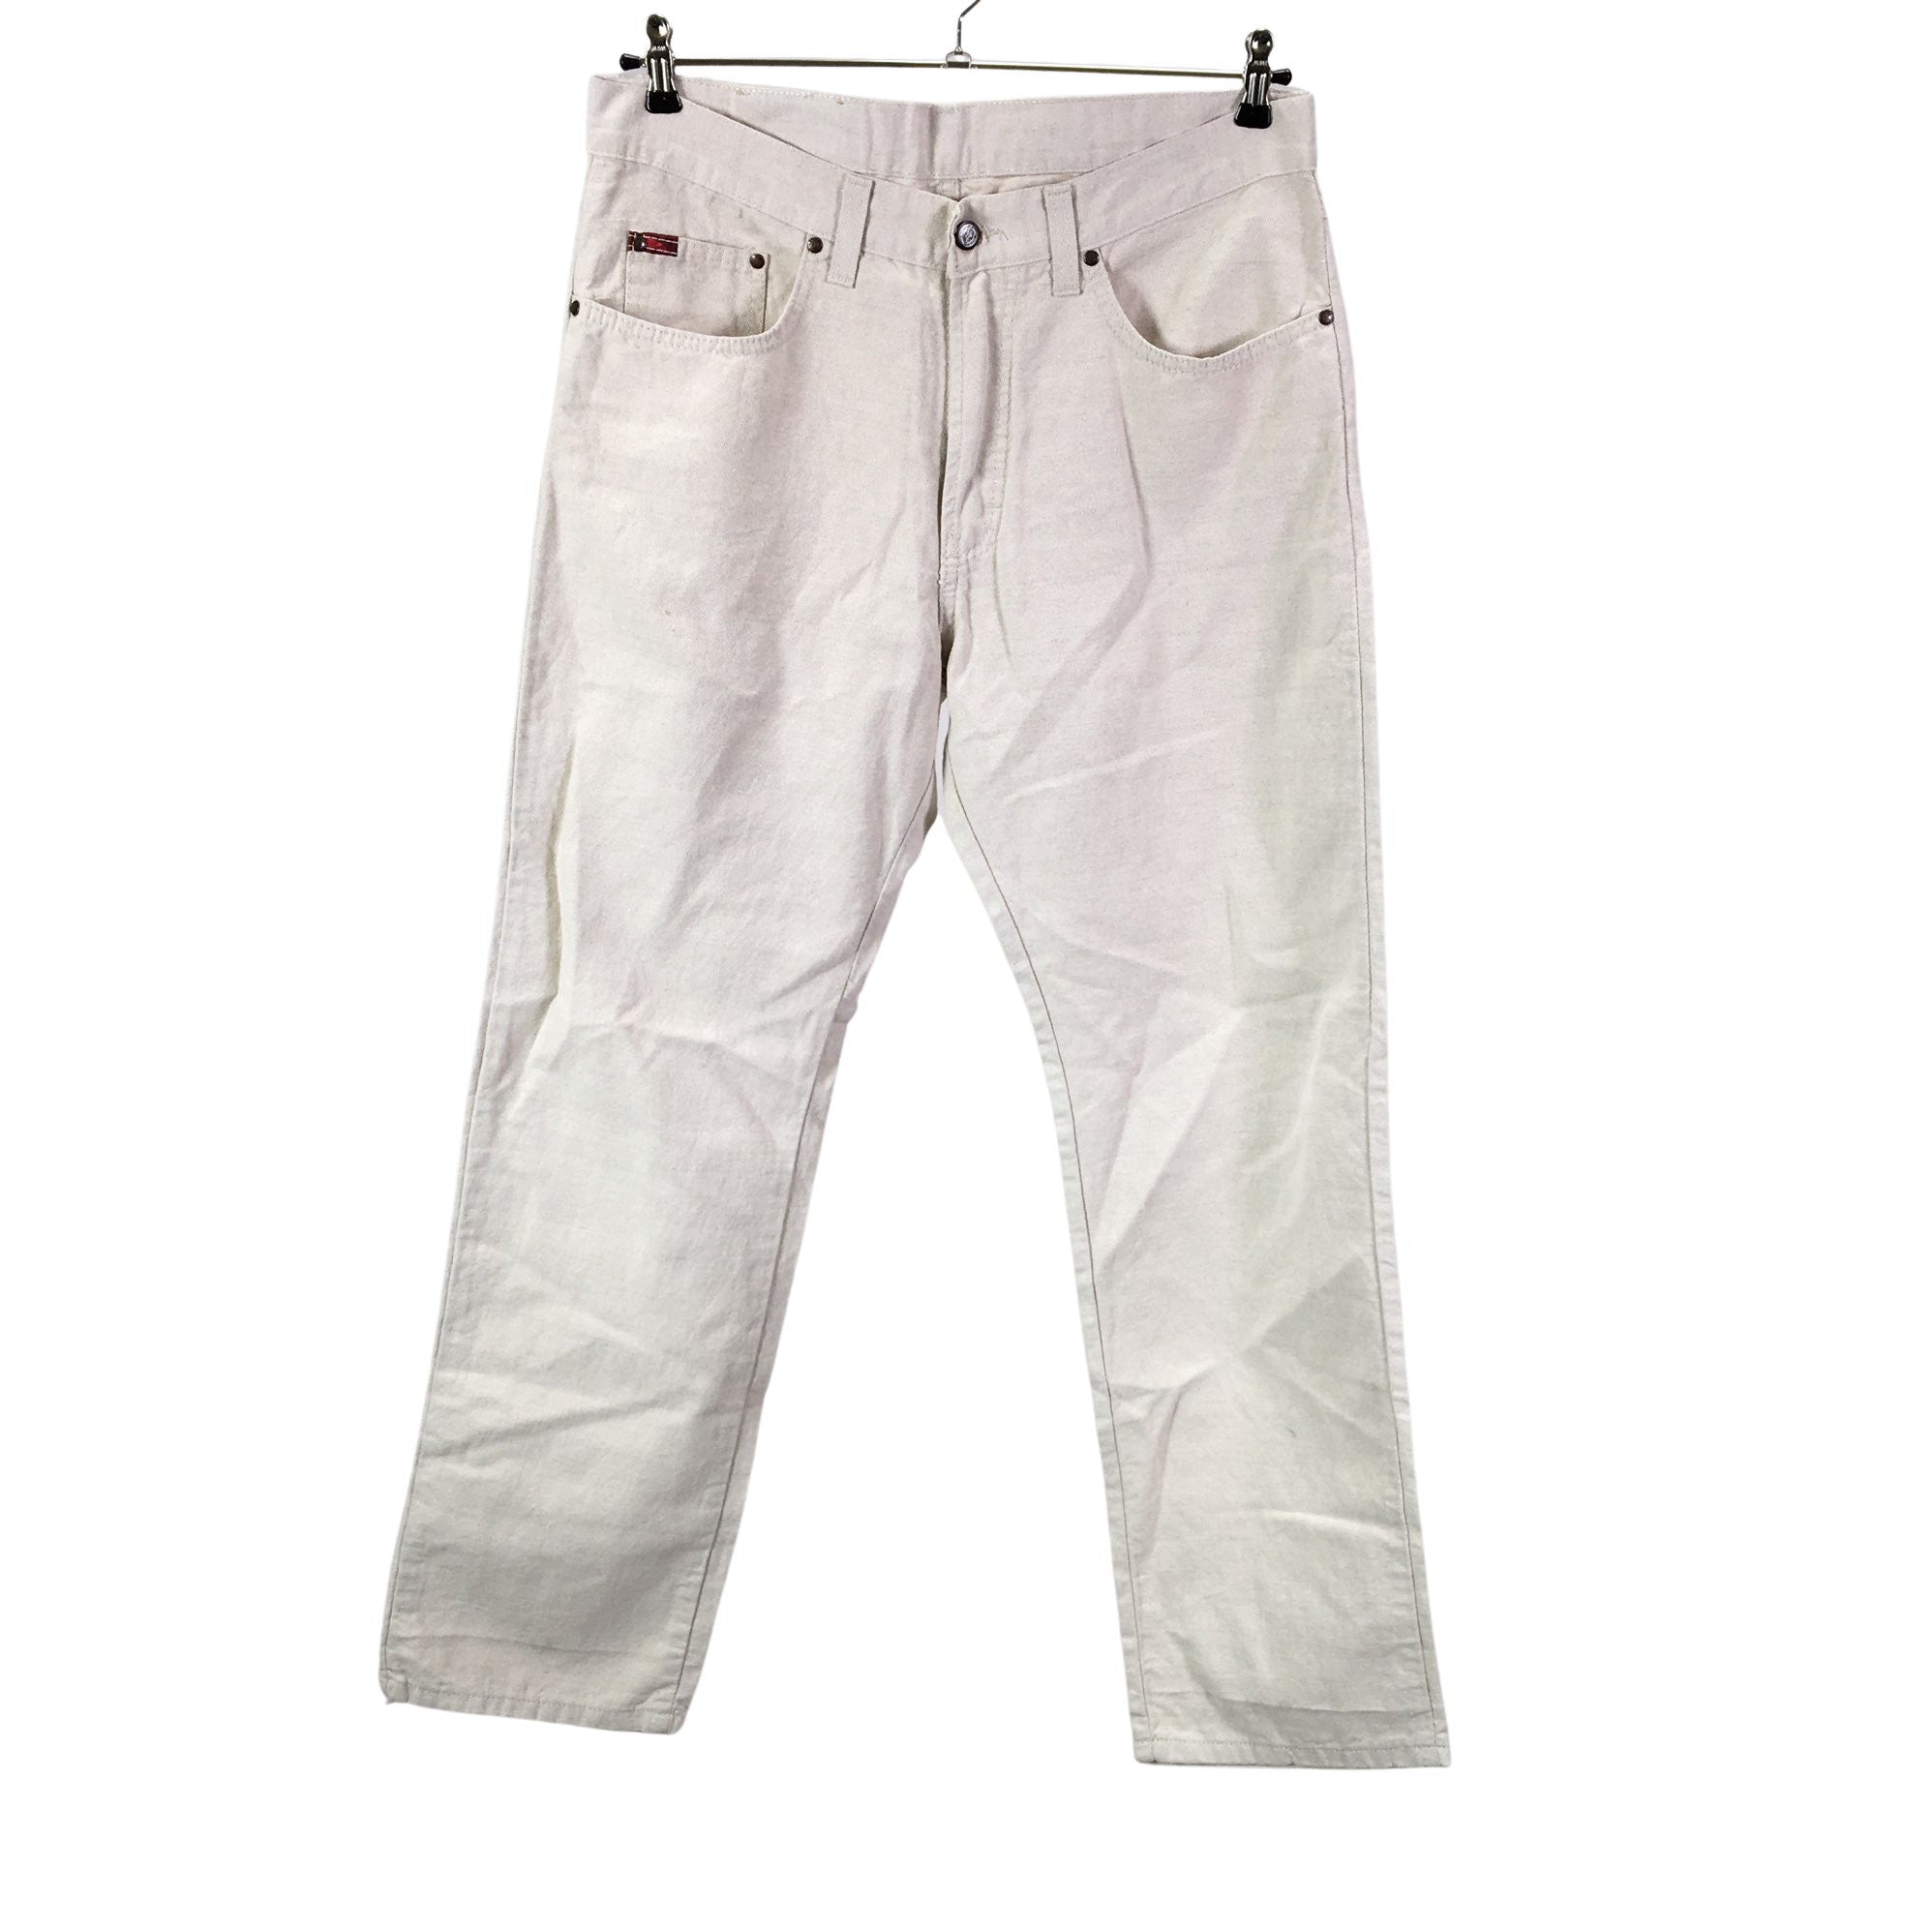 Lee Cooper corduroy straight leg jean | Straight leg jeans, Clothes design,  Mid waist pants